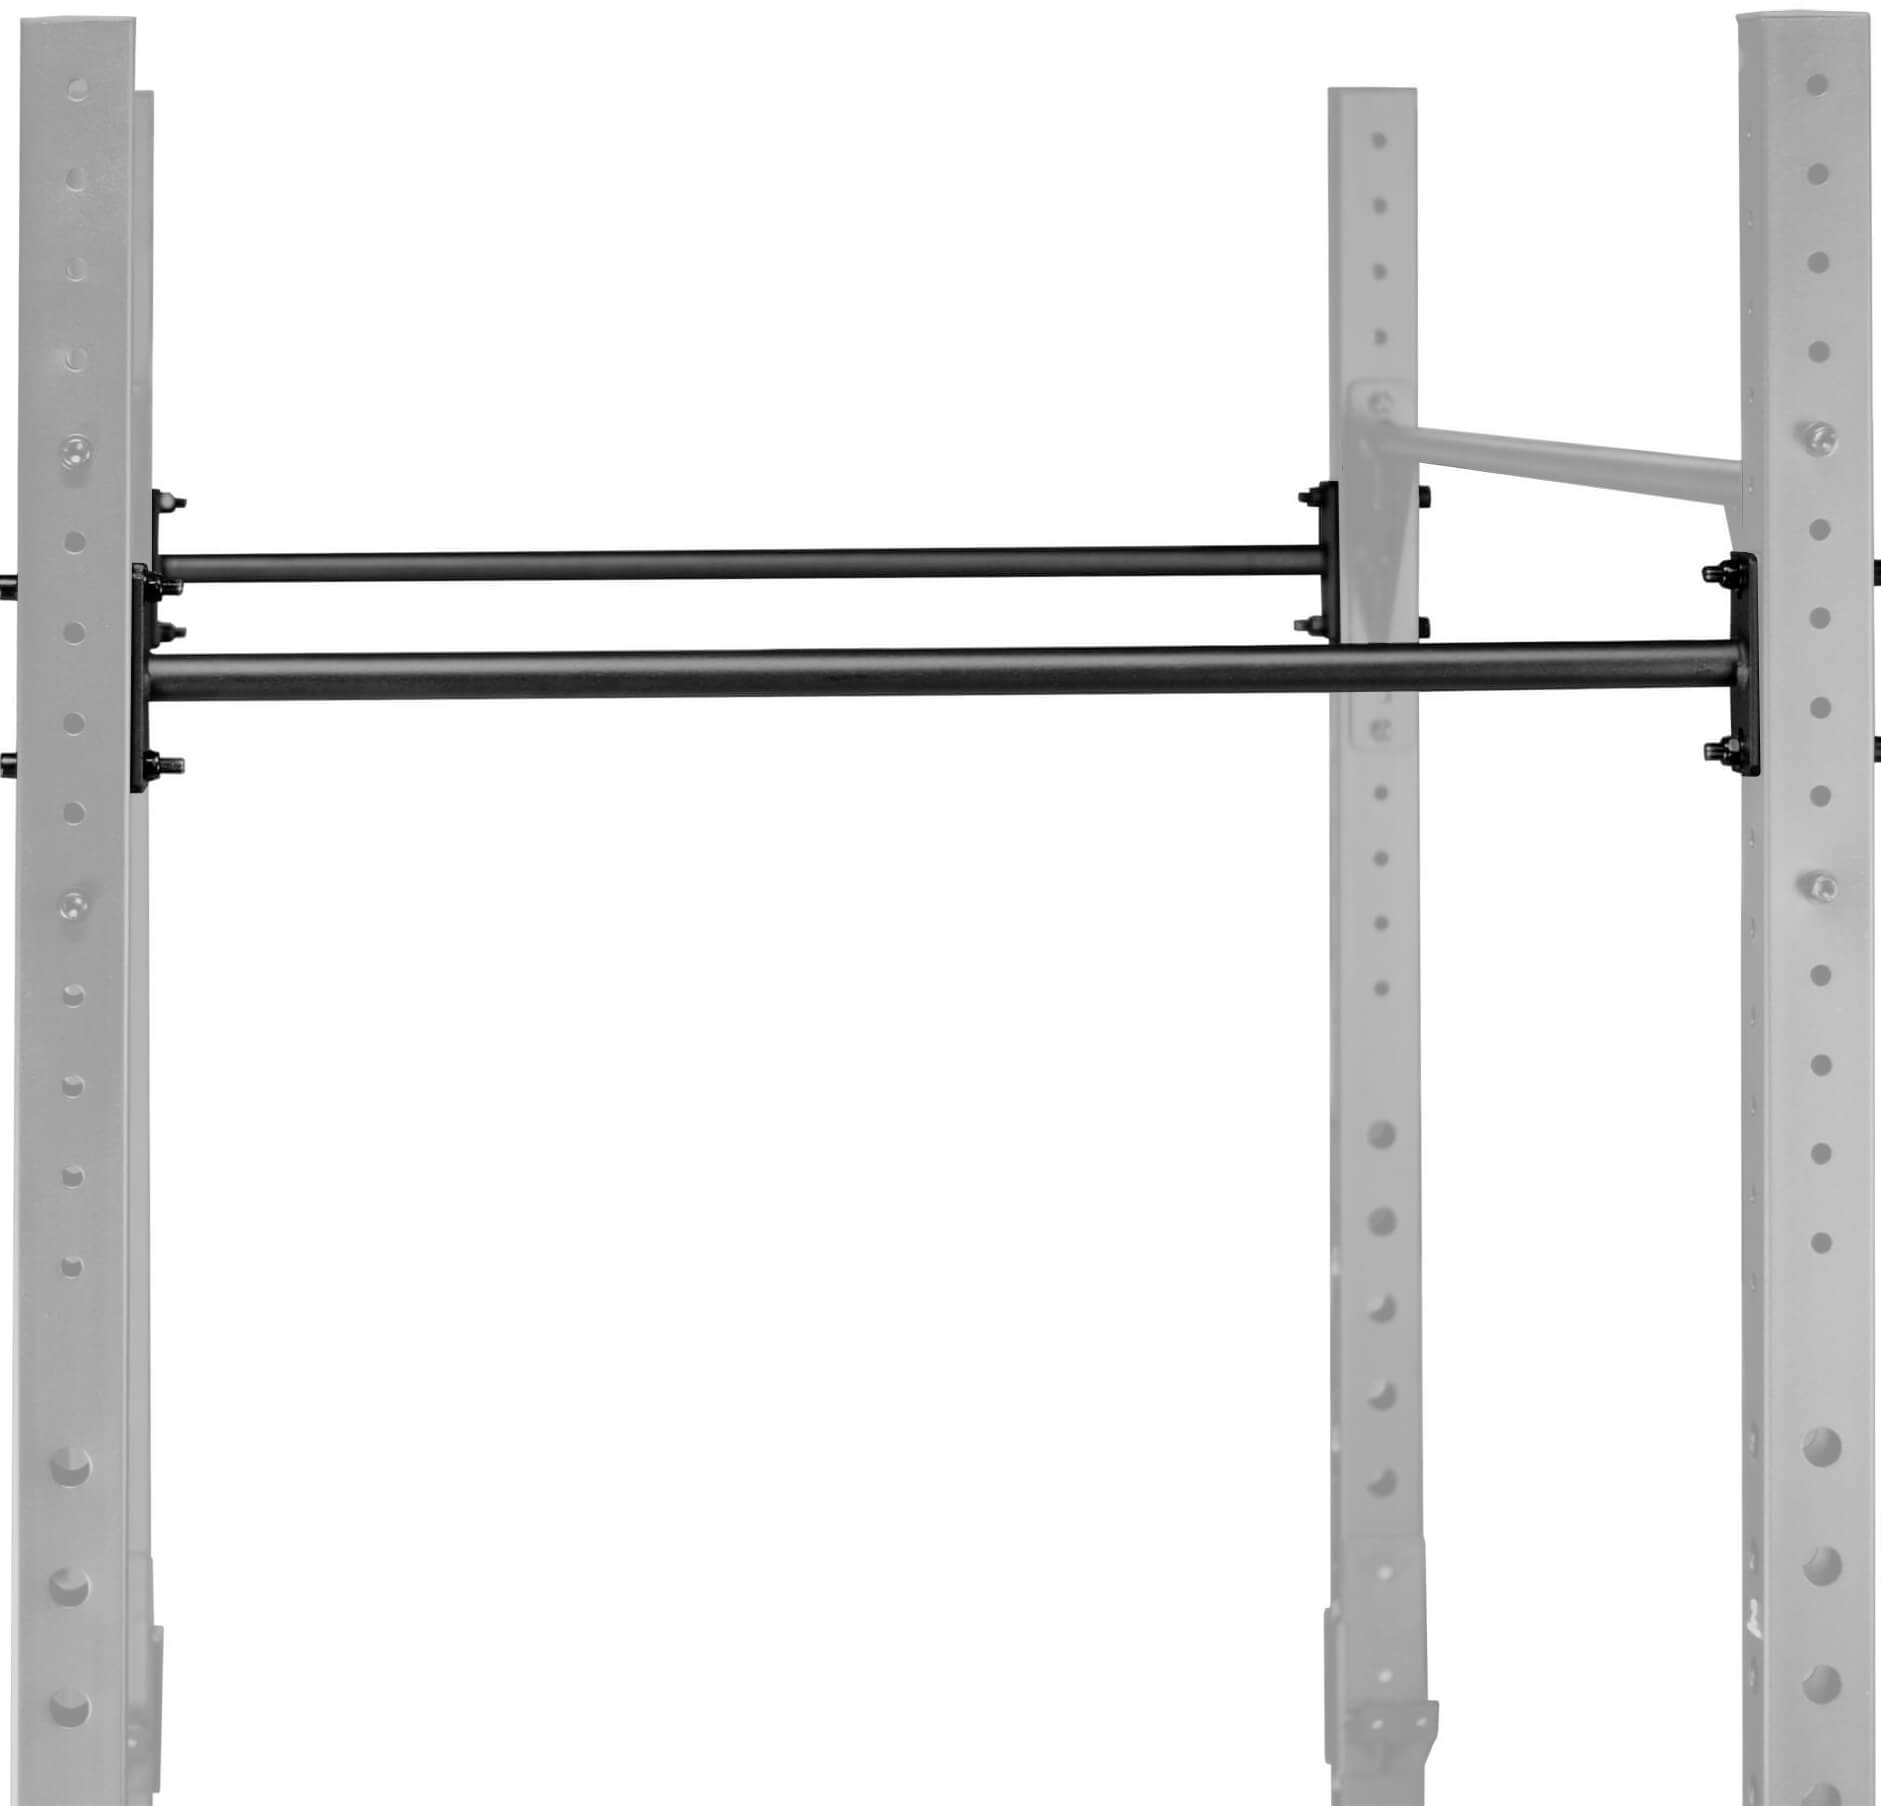 SQMIZE® Pull-Up Bar MR-M4 FV, 108 cm, Outdoor